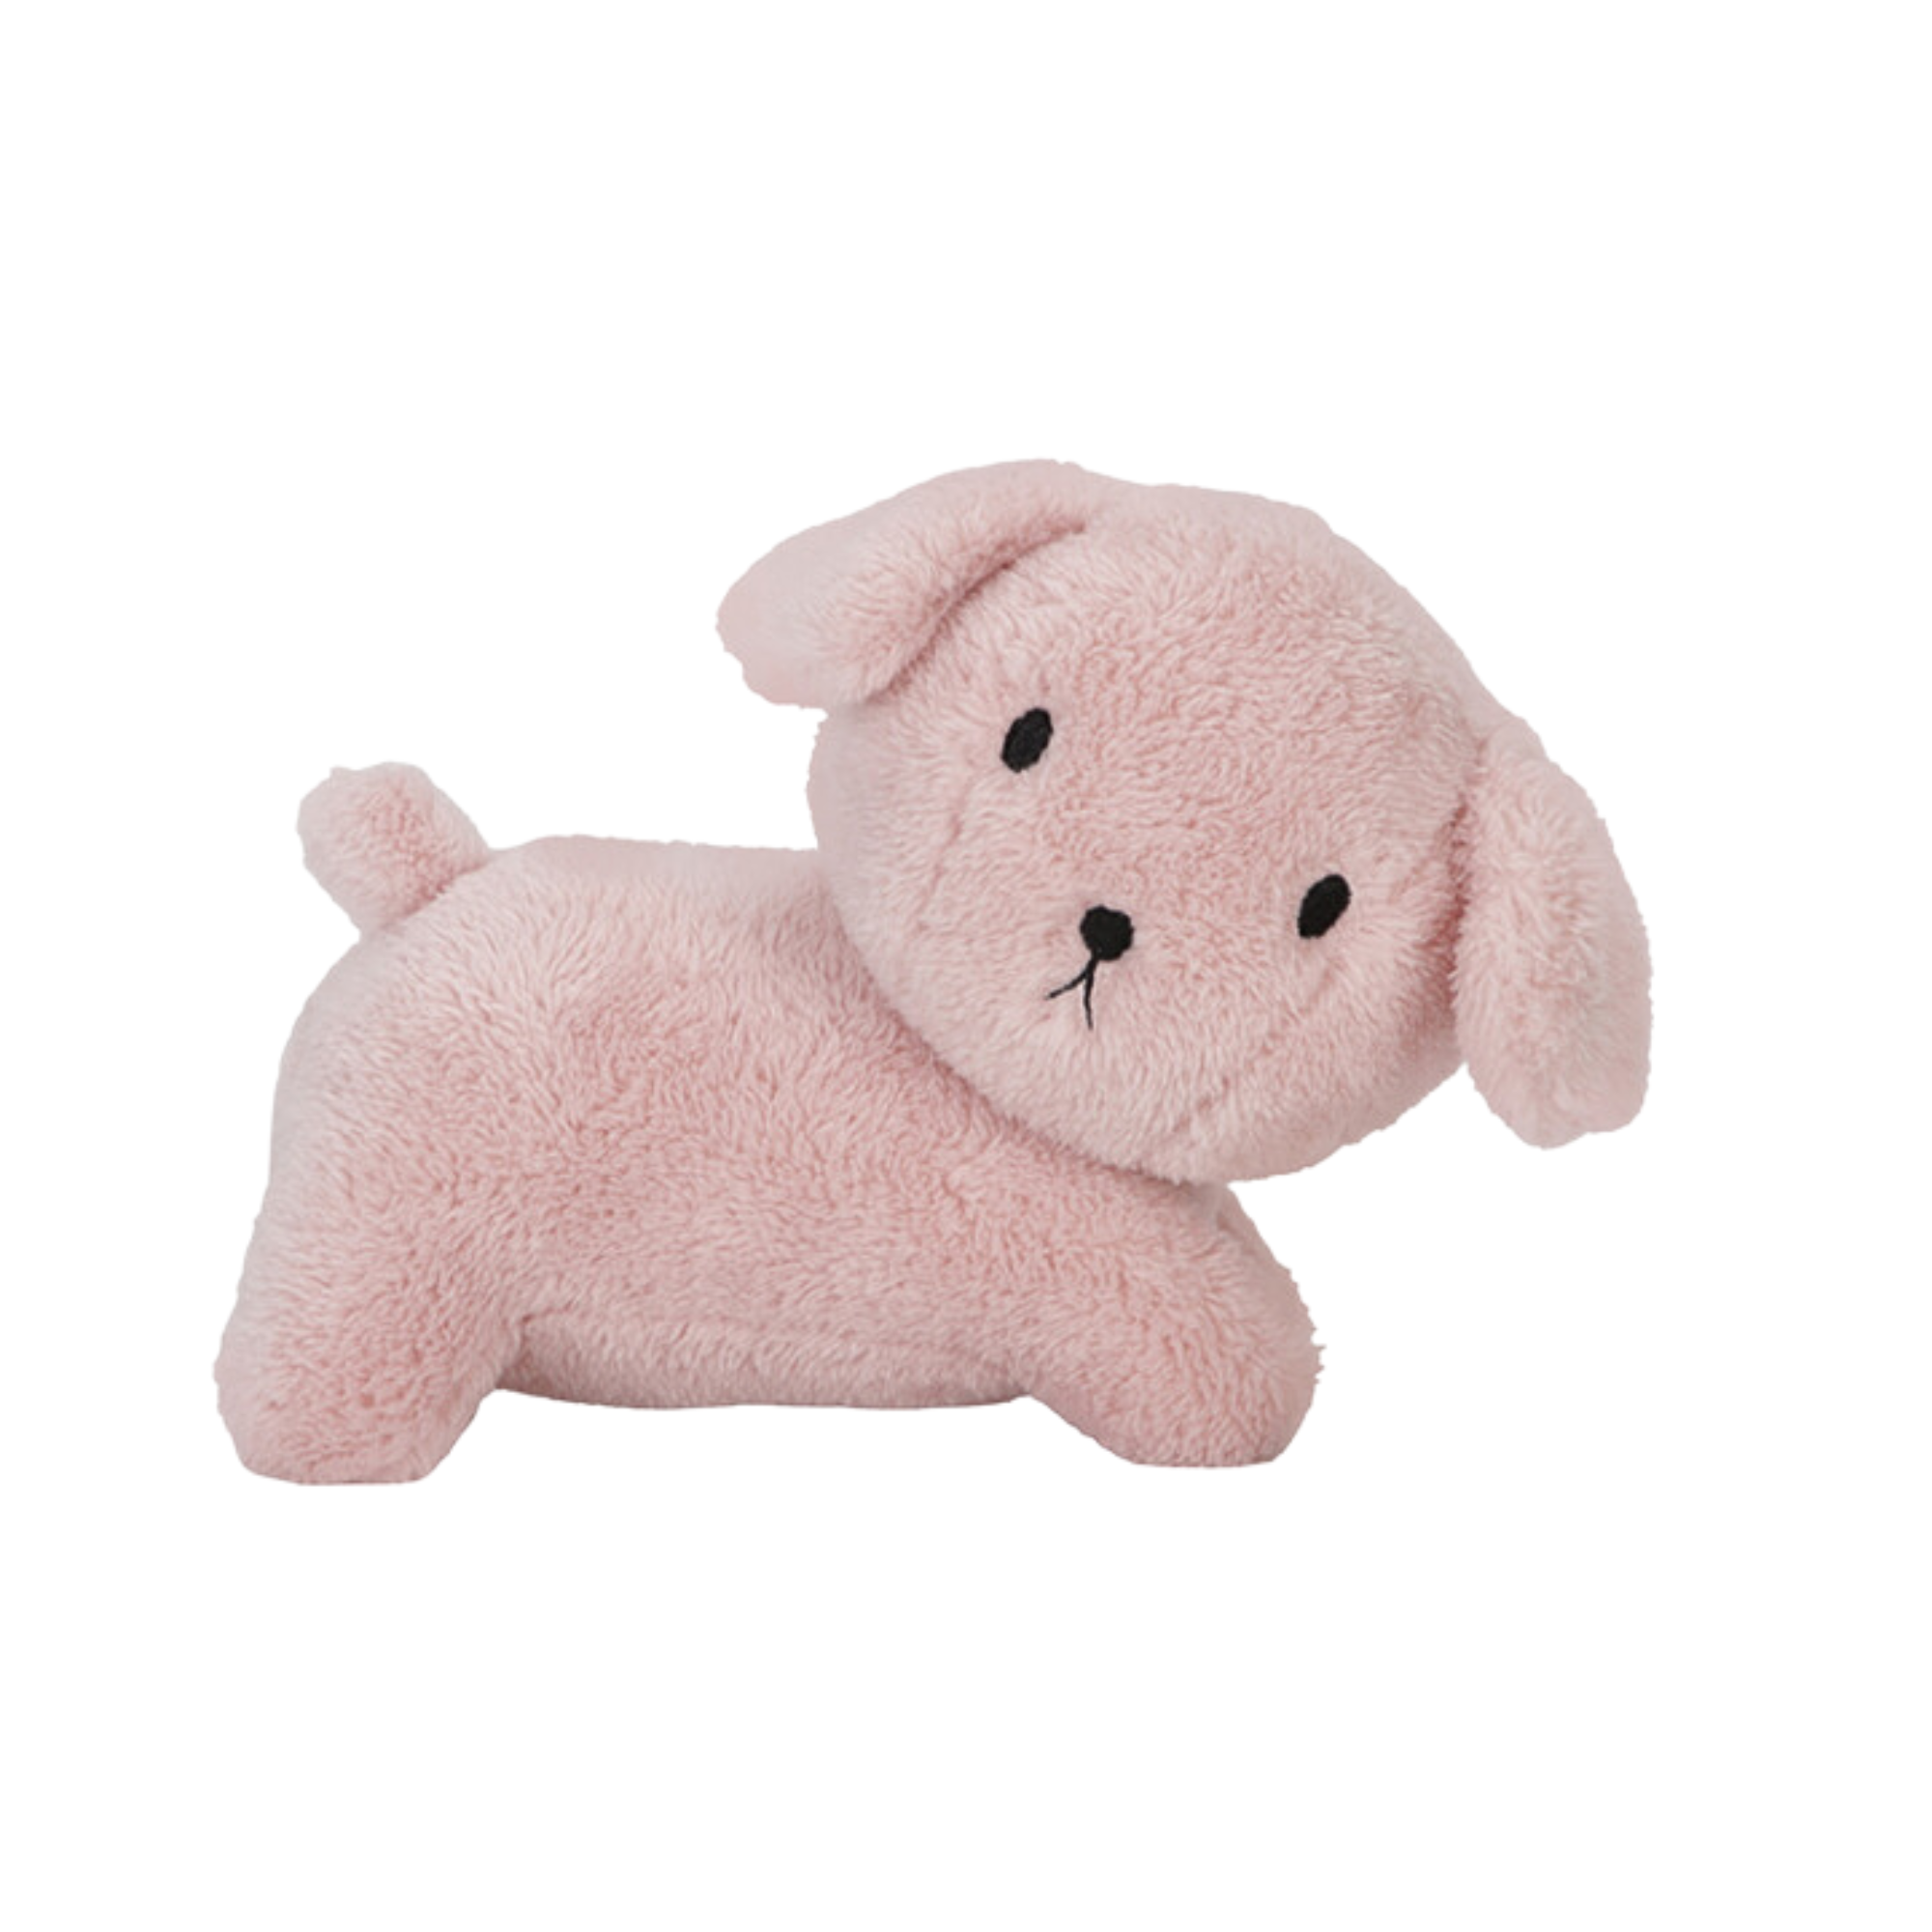 Plush puppy - Fluffy Pink